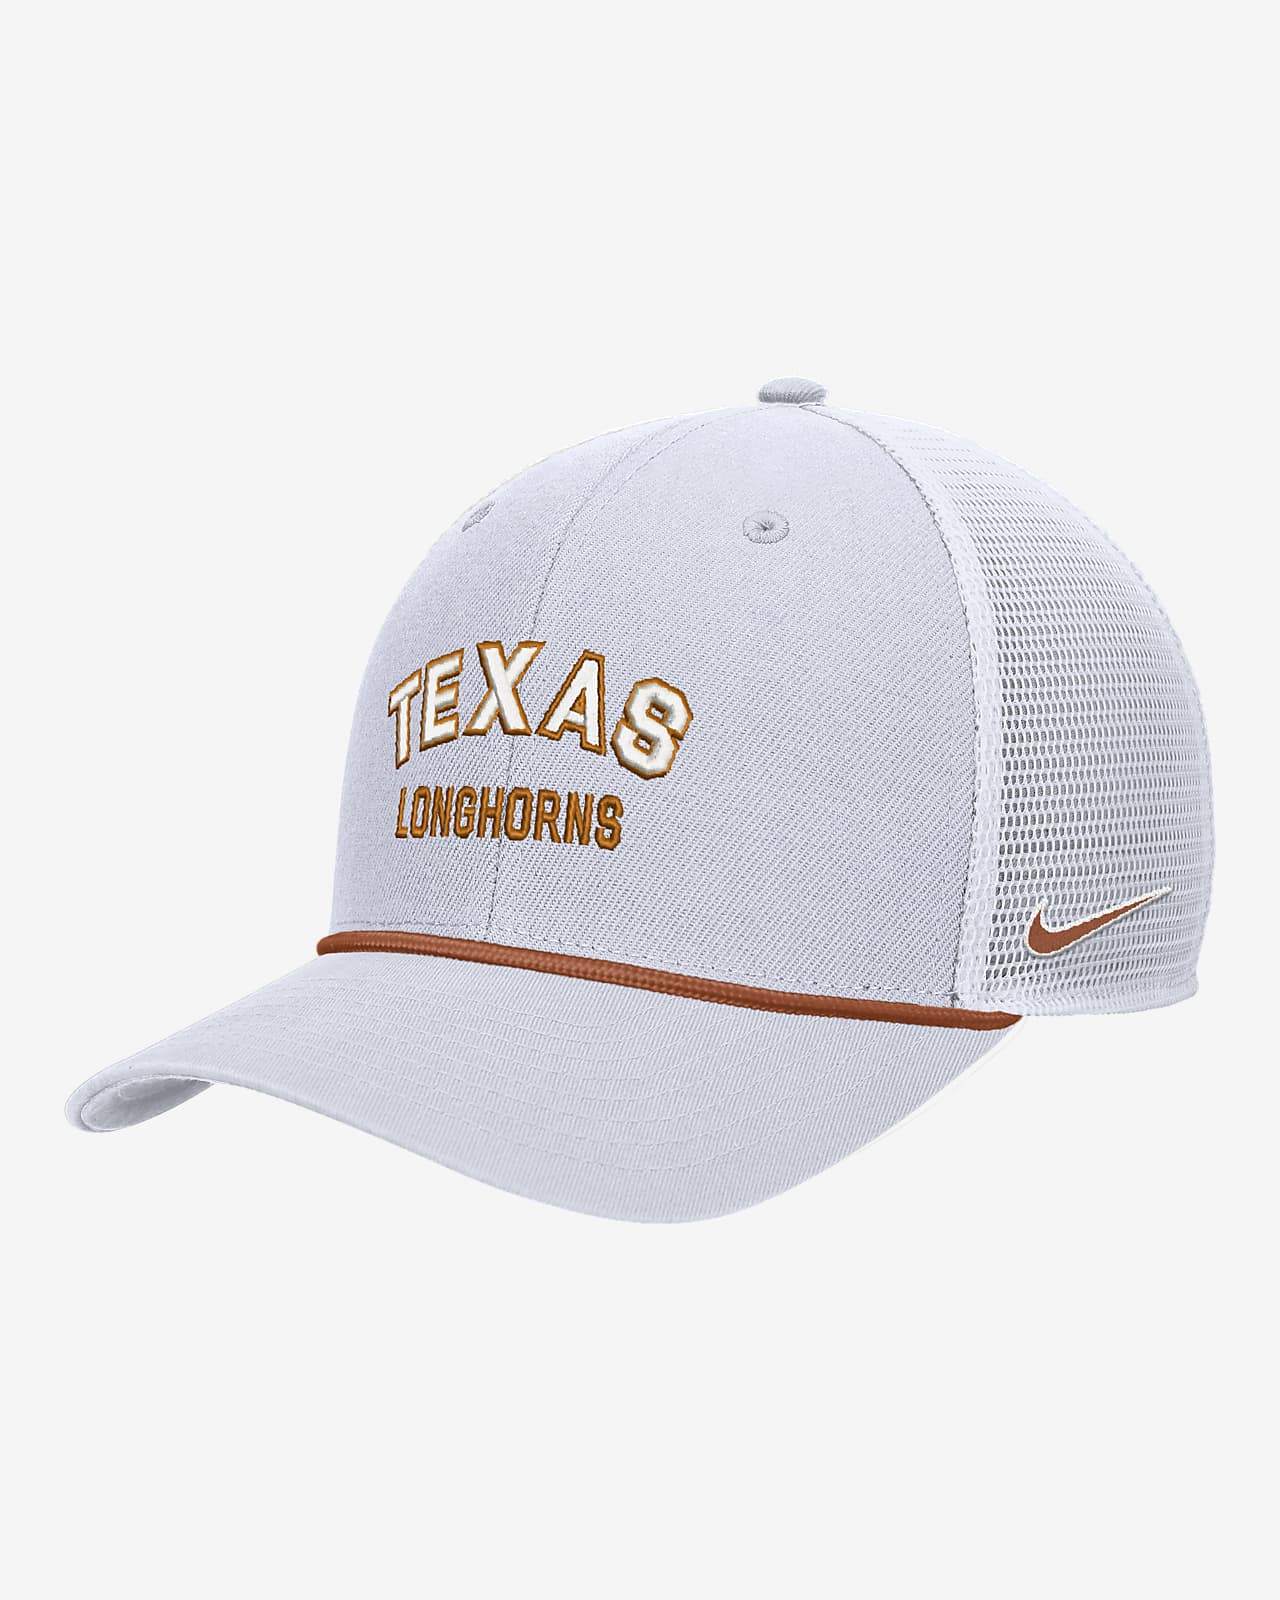 Texas Nike College Snapback Trucker Hat